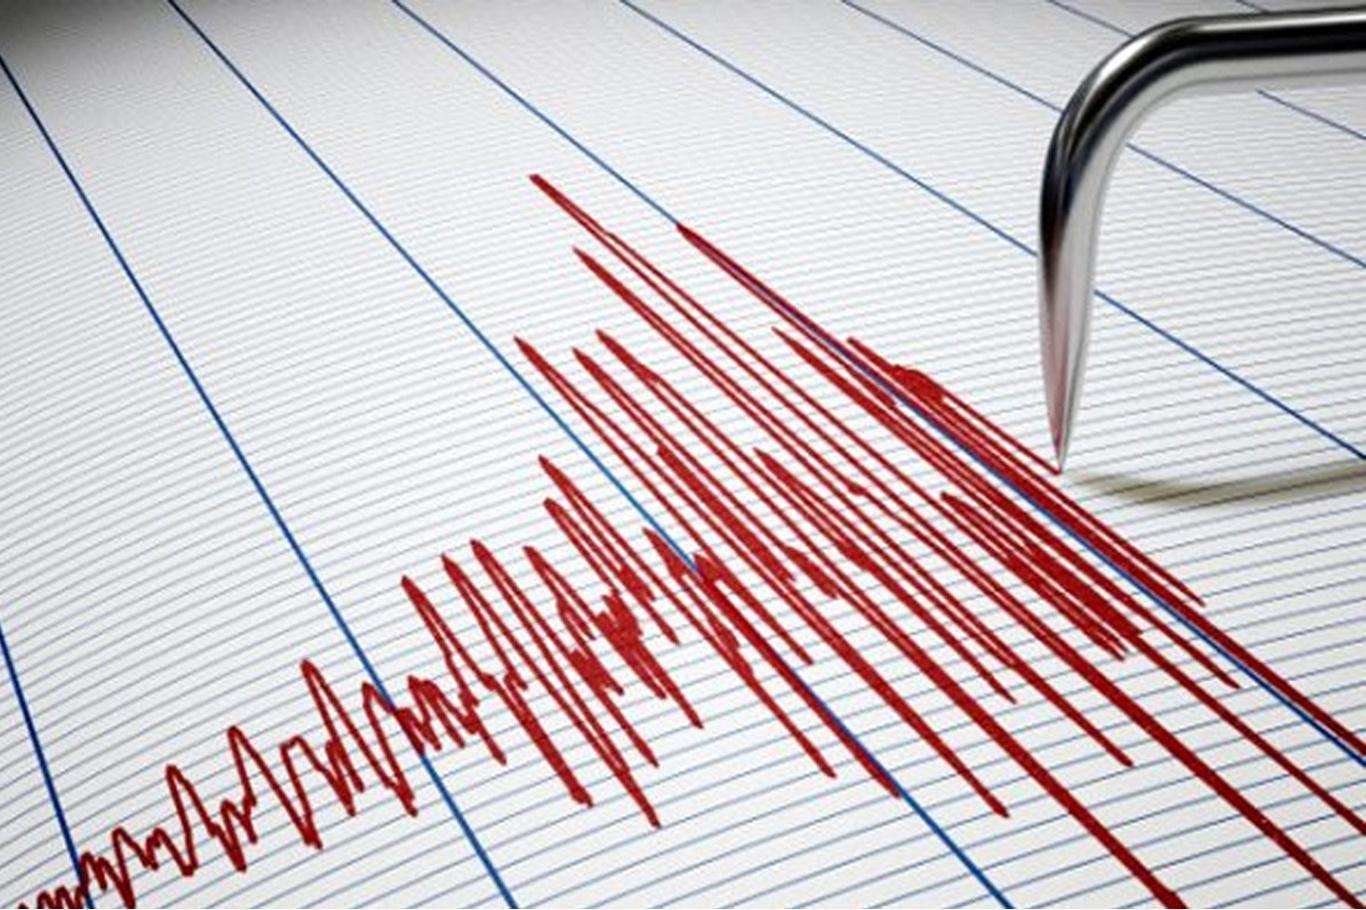 A 3.4 earthquake shakes western Turkey